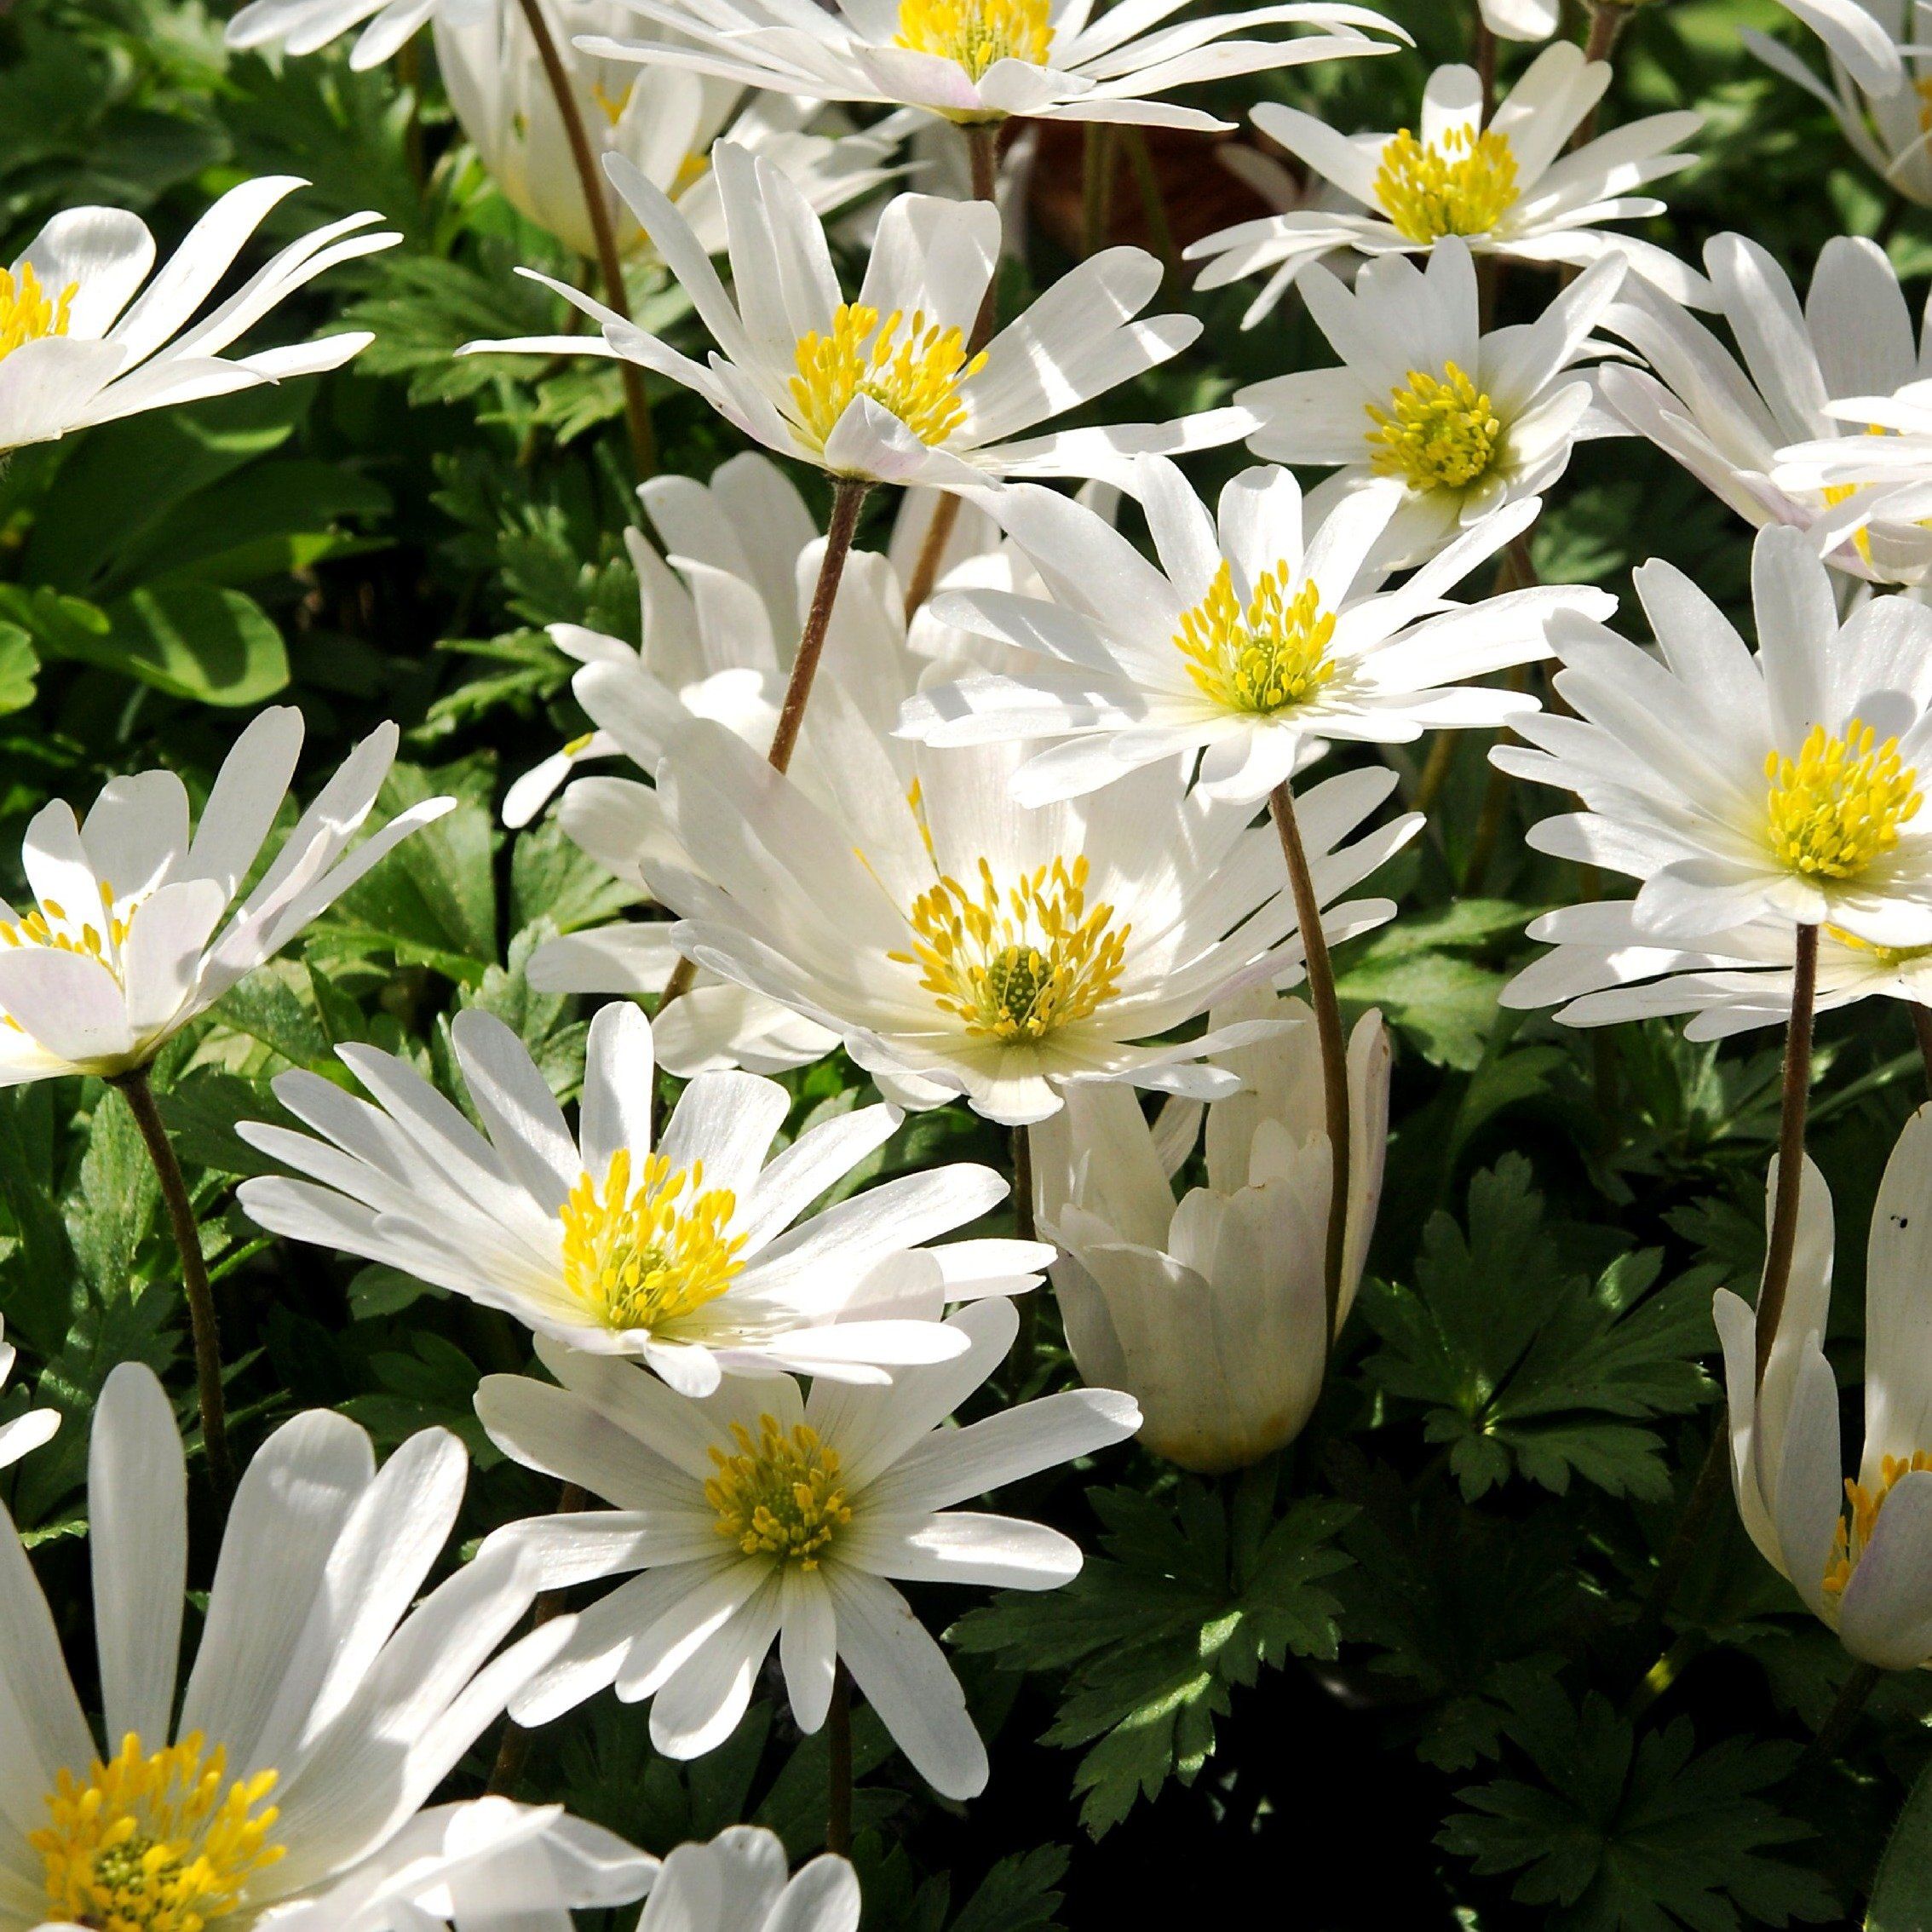 Anemone blanda "White Splendor" Fall-Planted Flower Valley Seed Company